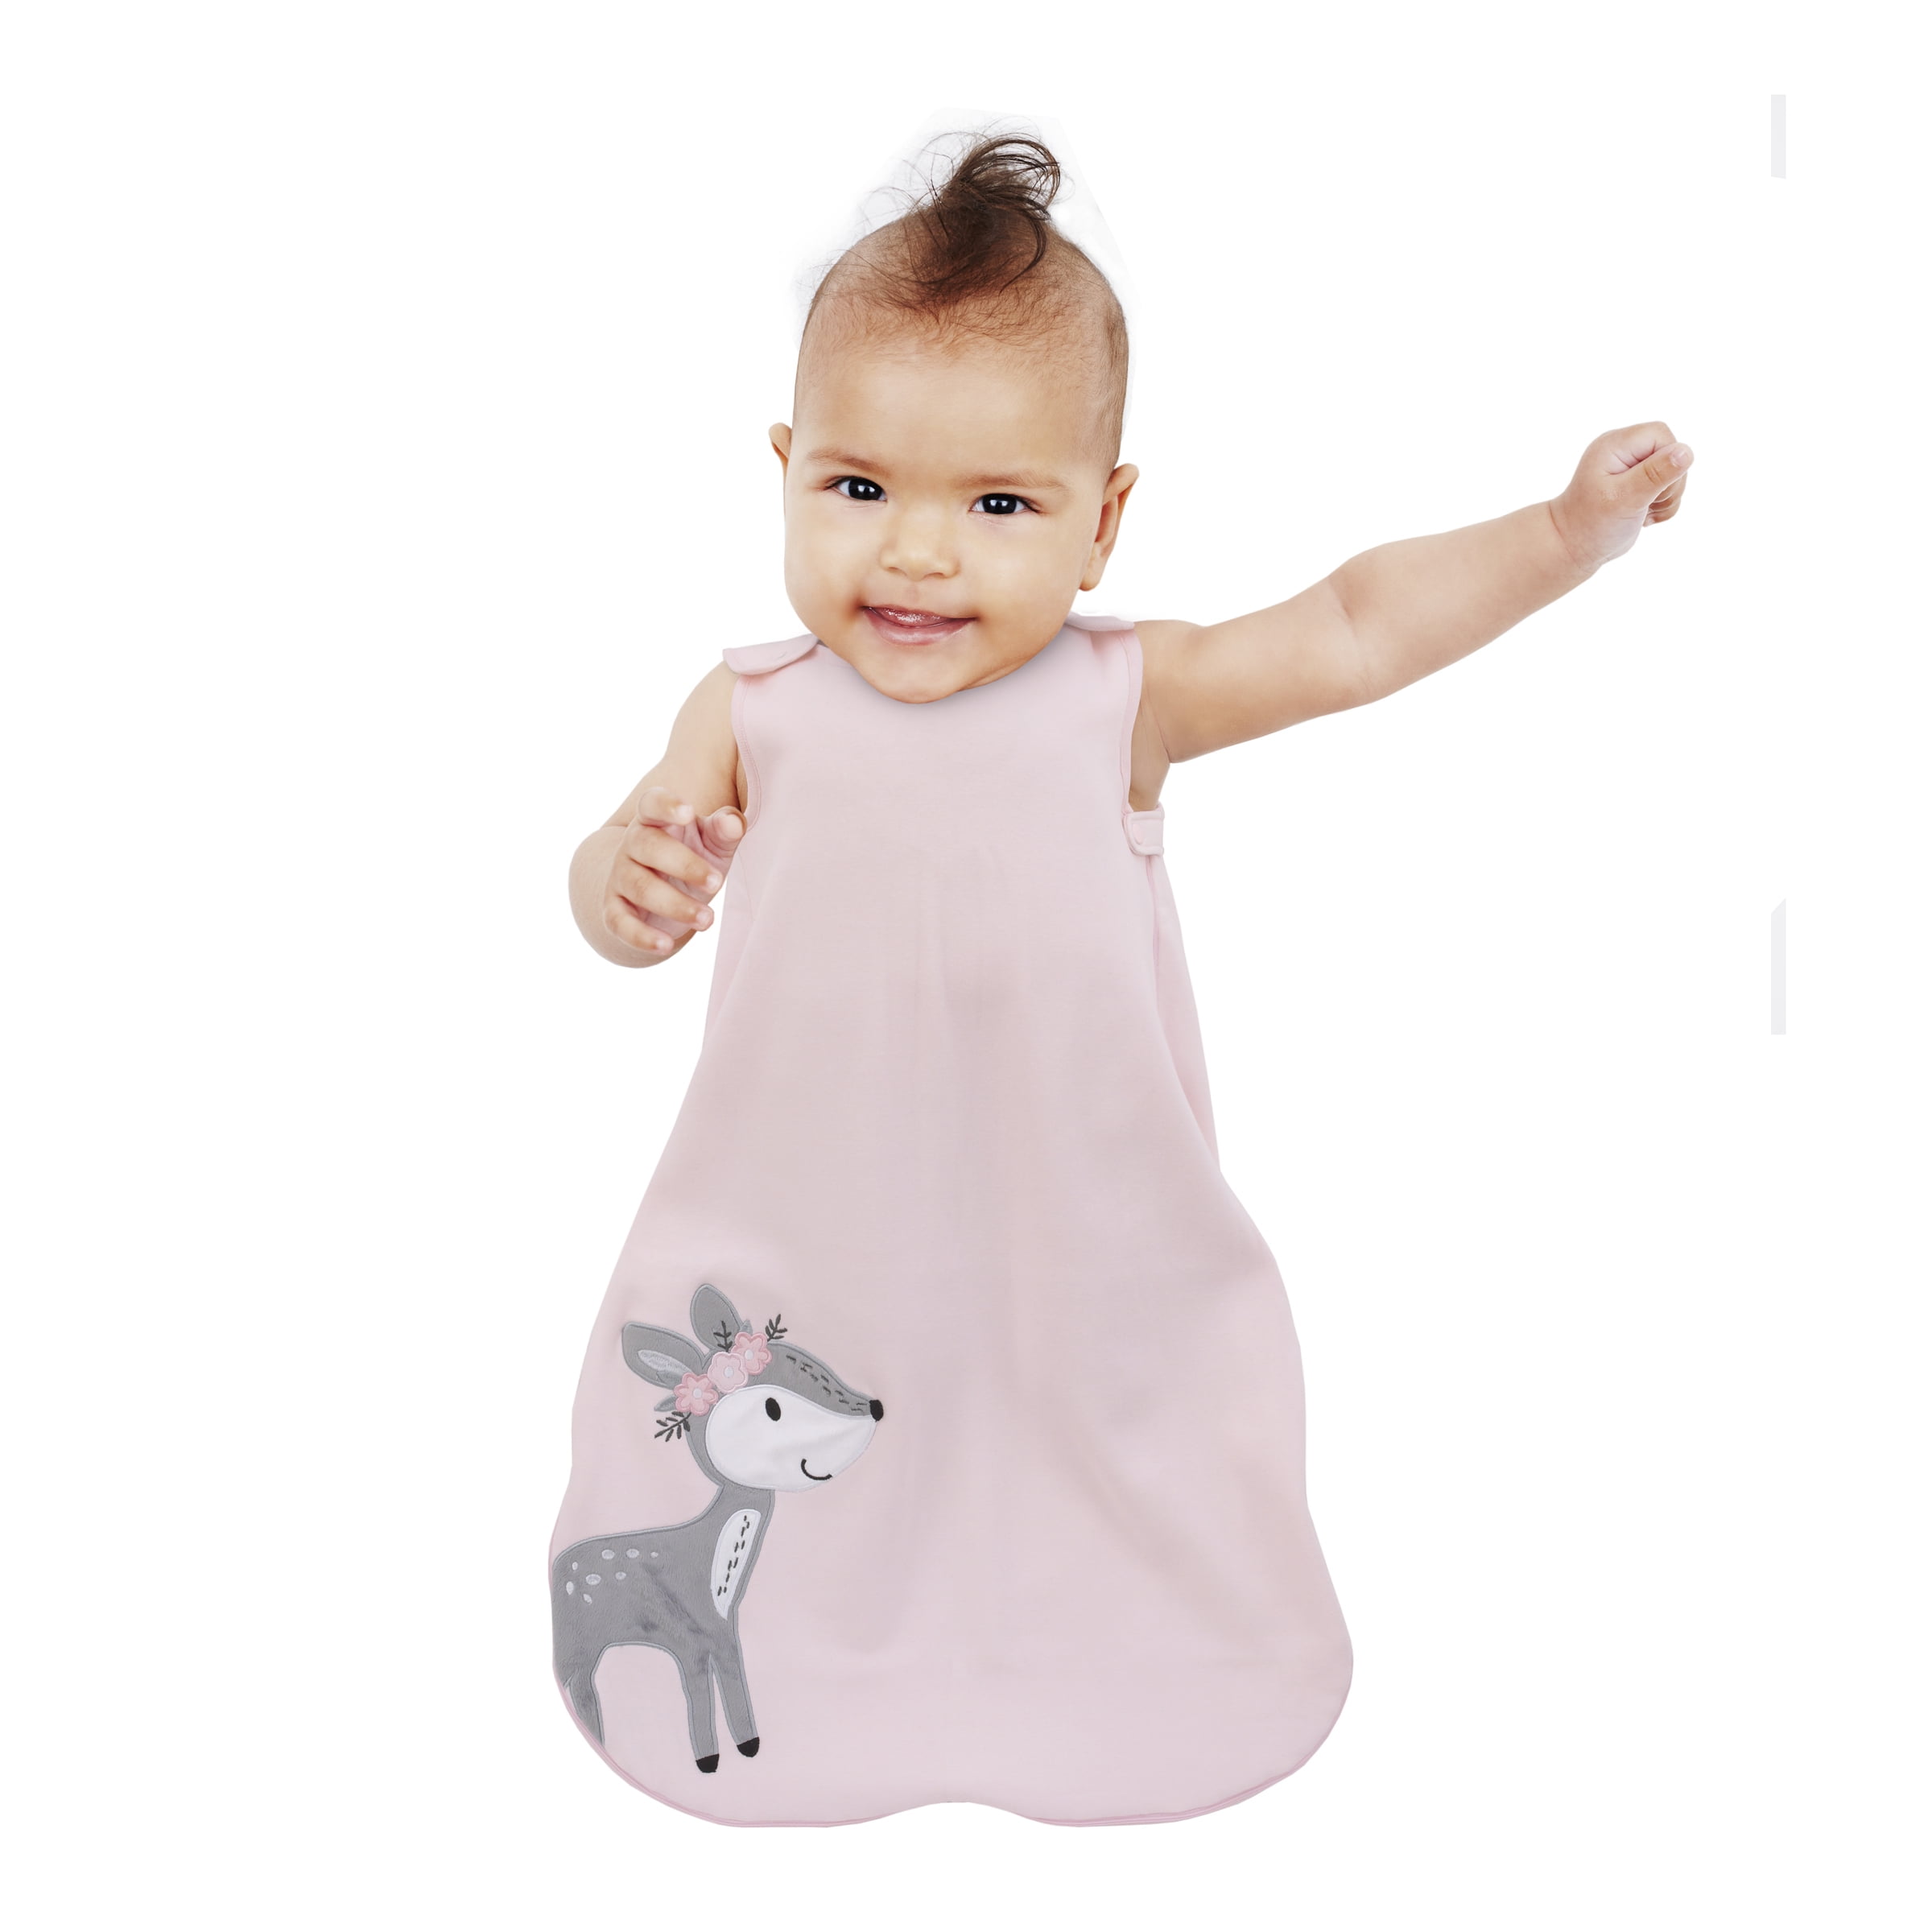 Disney Princess Baby Sleepsuit Pink Soft Fleece 3 To 6 Months  NEW Sealed Bag 